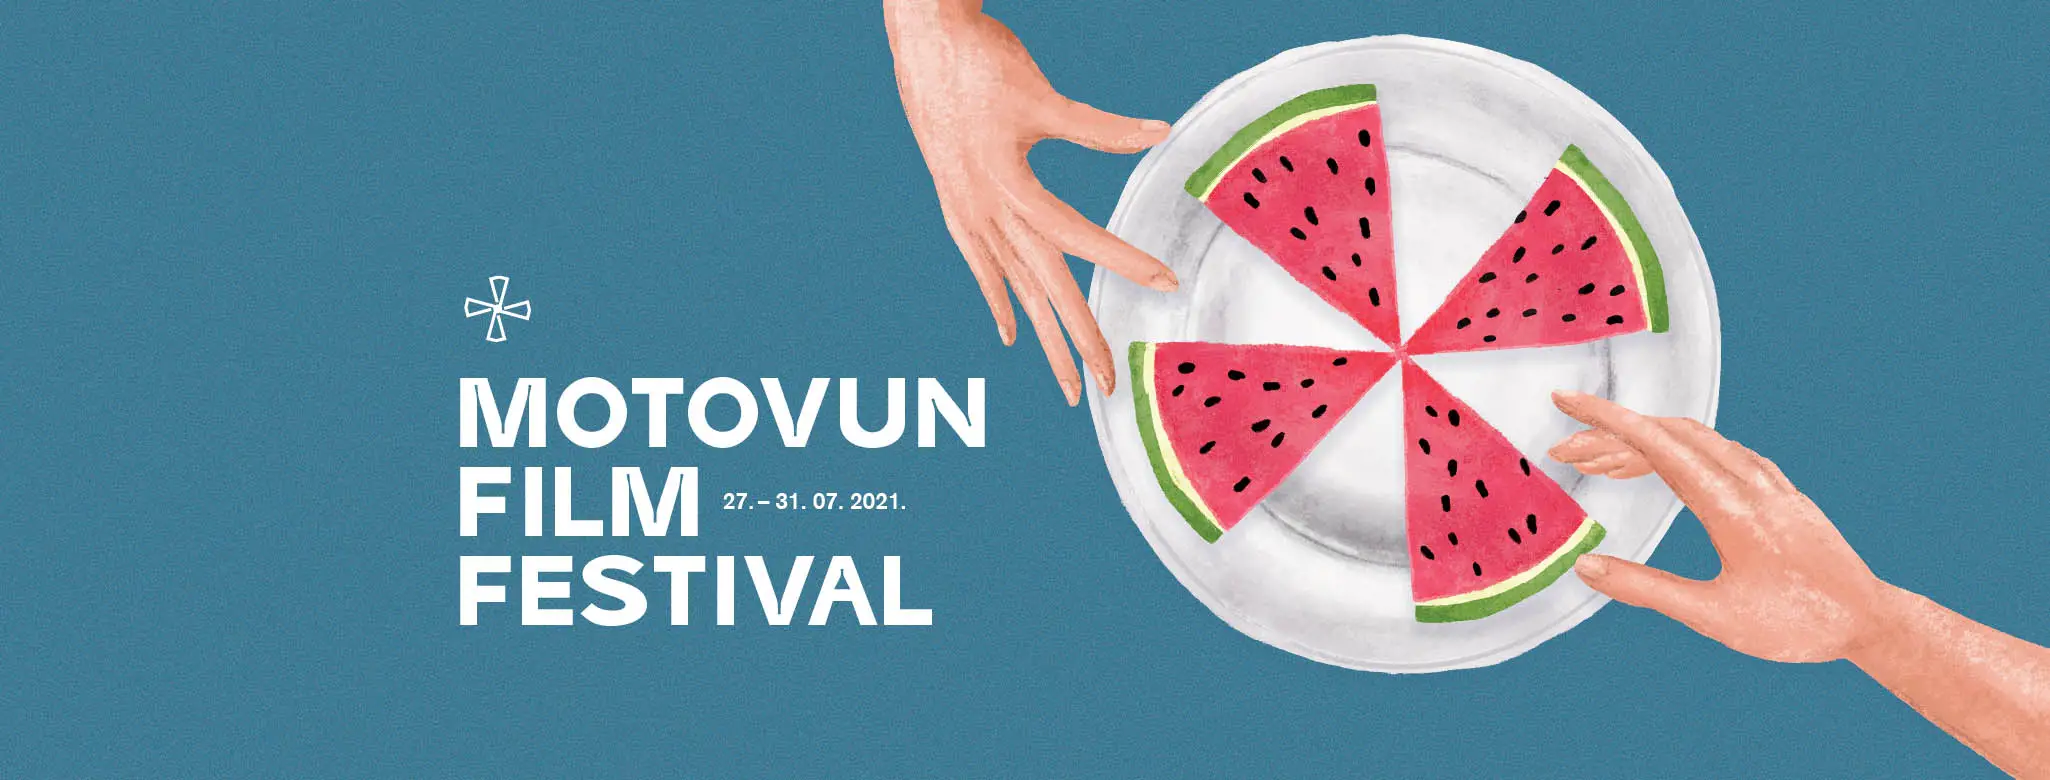 Motovun Film Festival 2021 Facebook